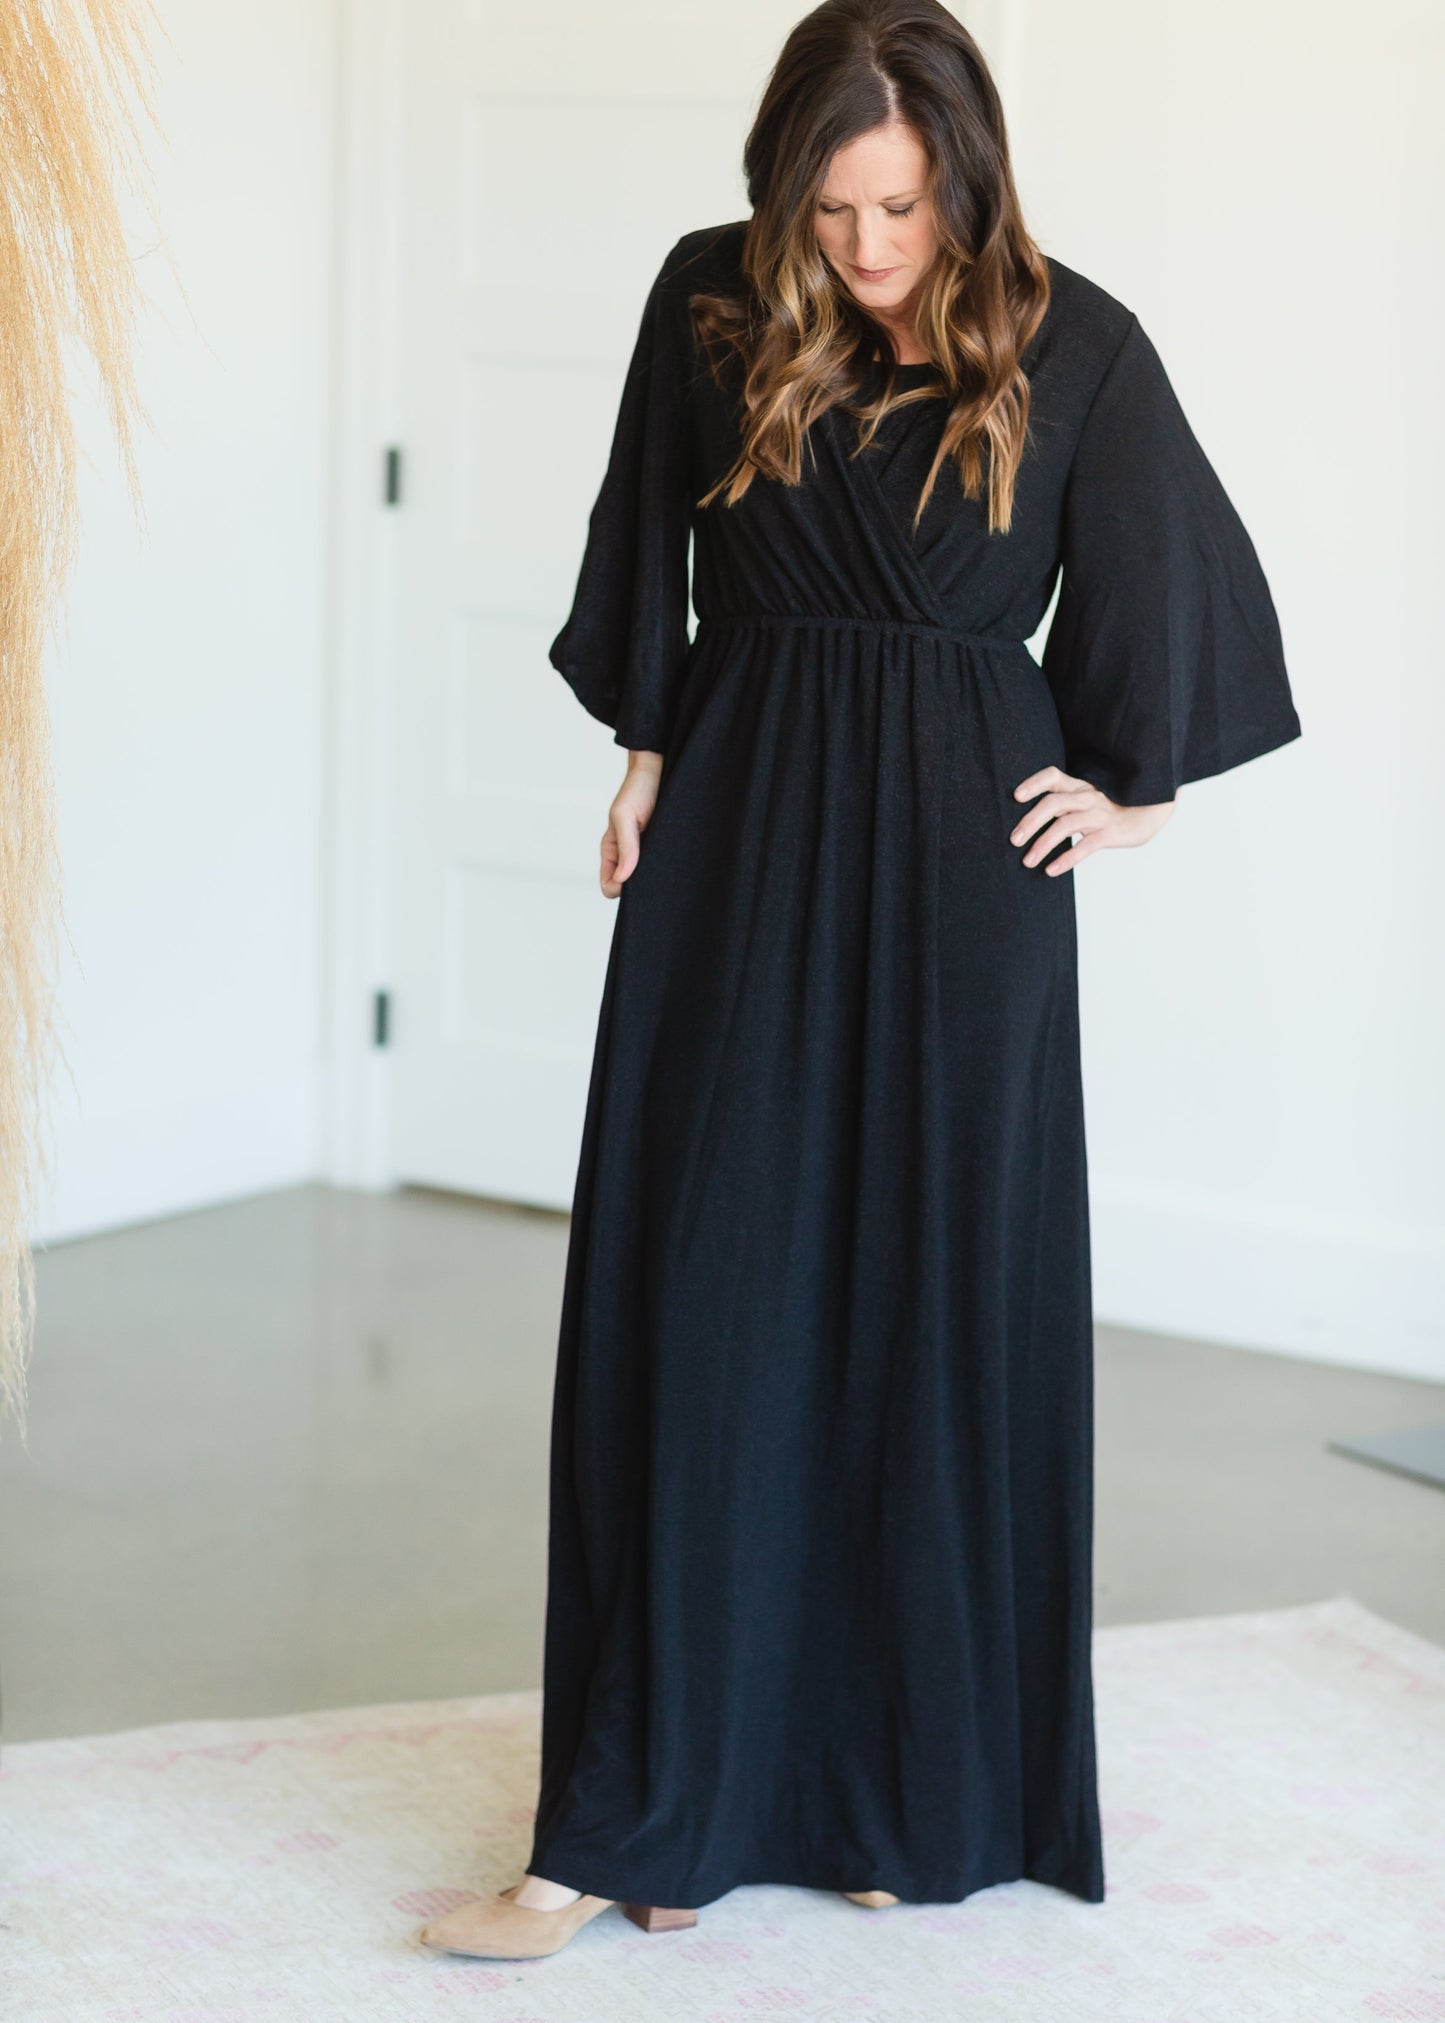 Black Sheen Maxi Dress - FINAL SALE Dresses